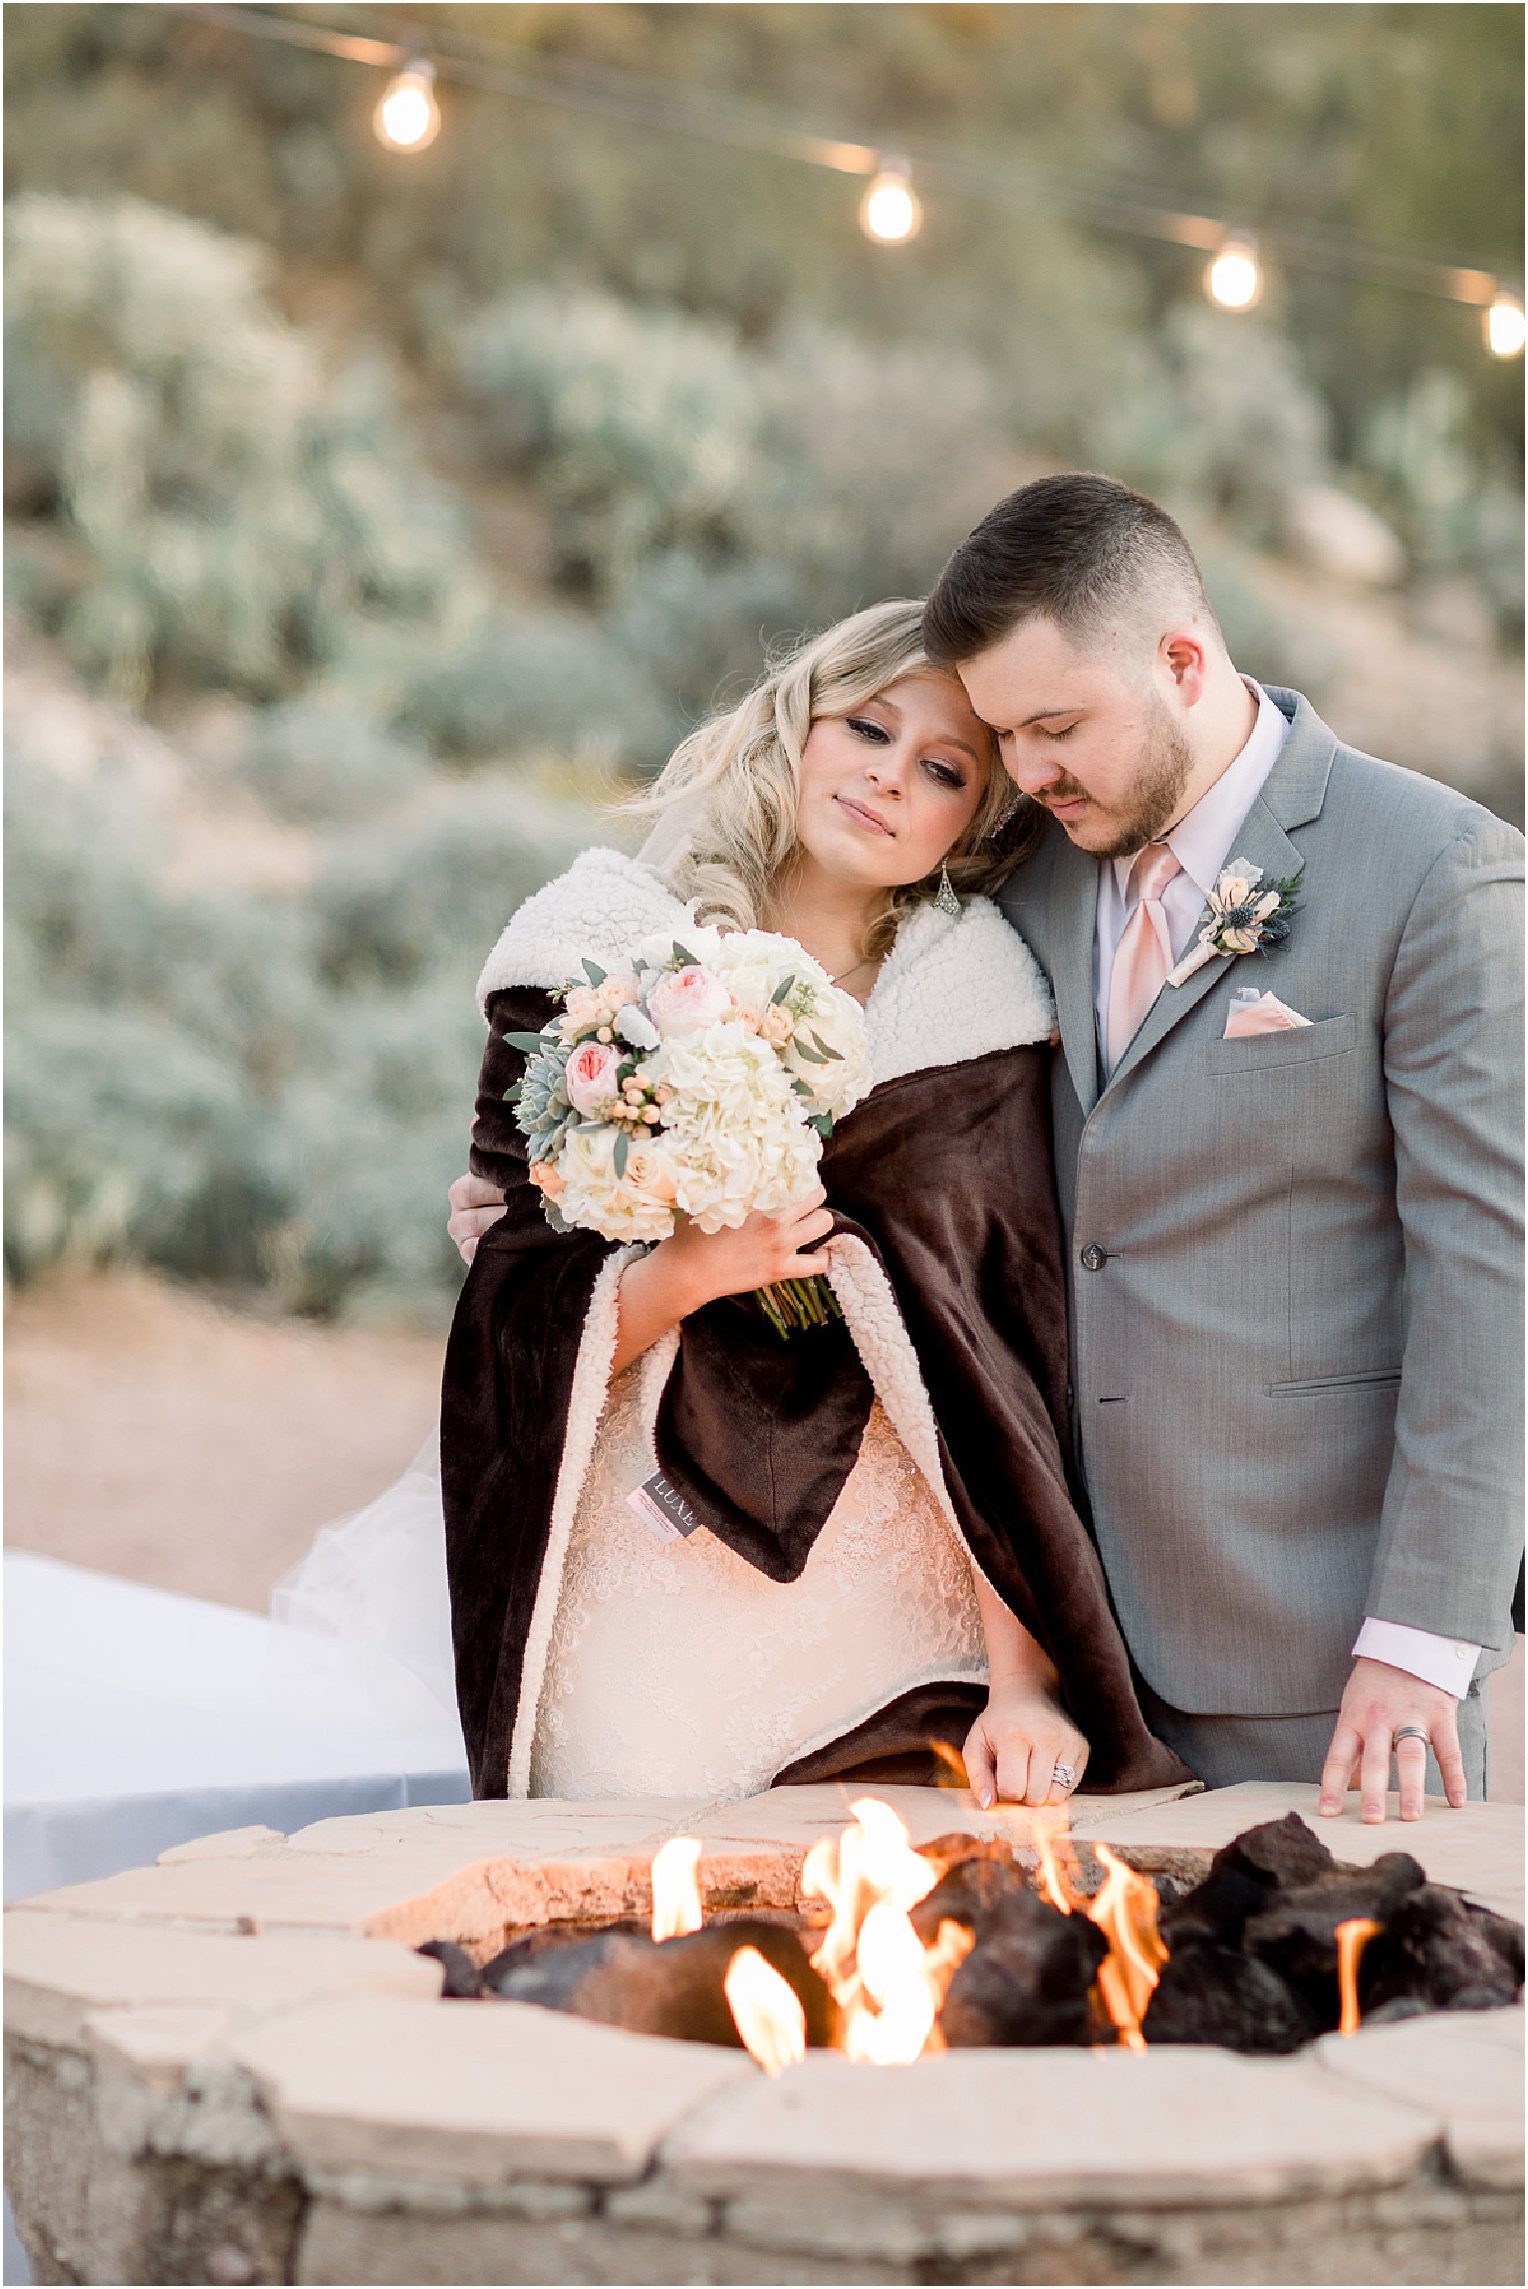 Annabelle + James Hilton El Conquistador Wedding bride and groom sunset dessert portraits by campfire